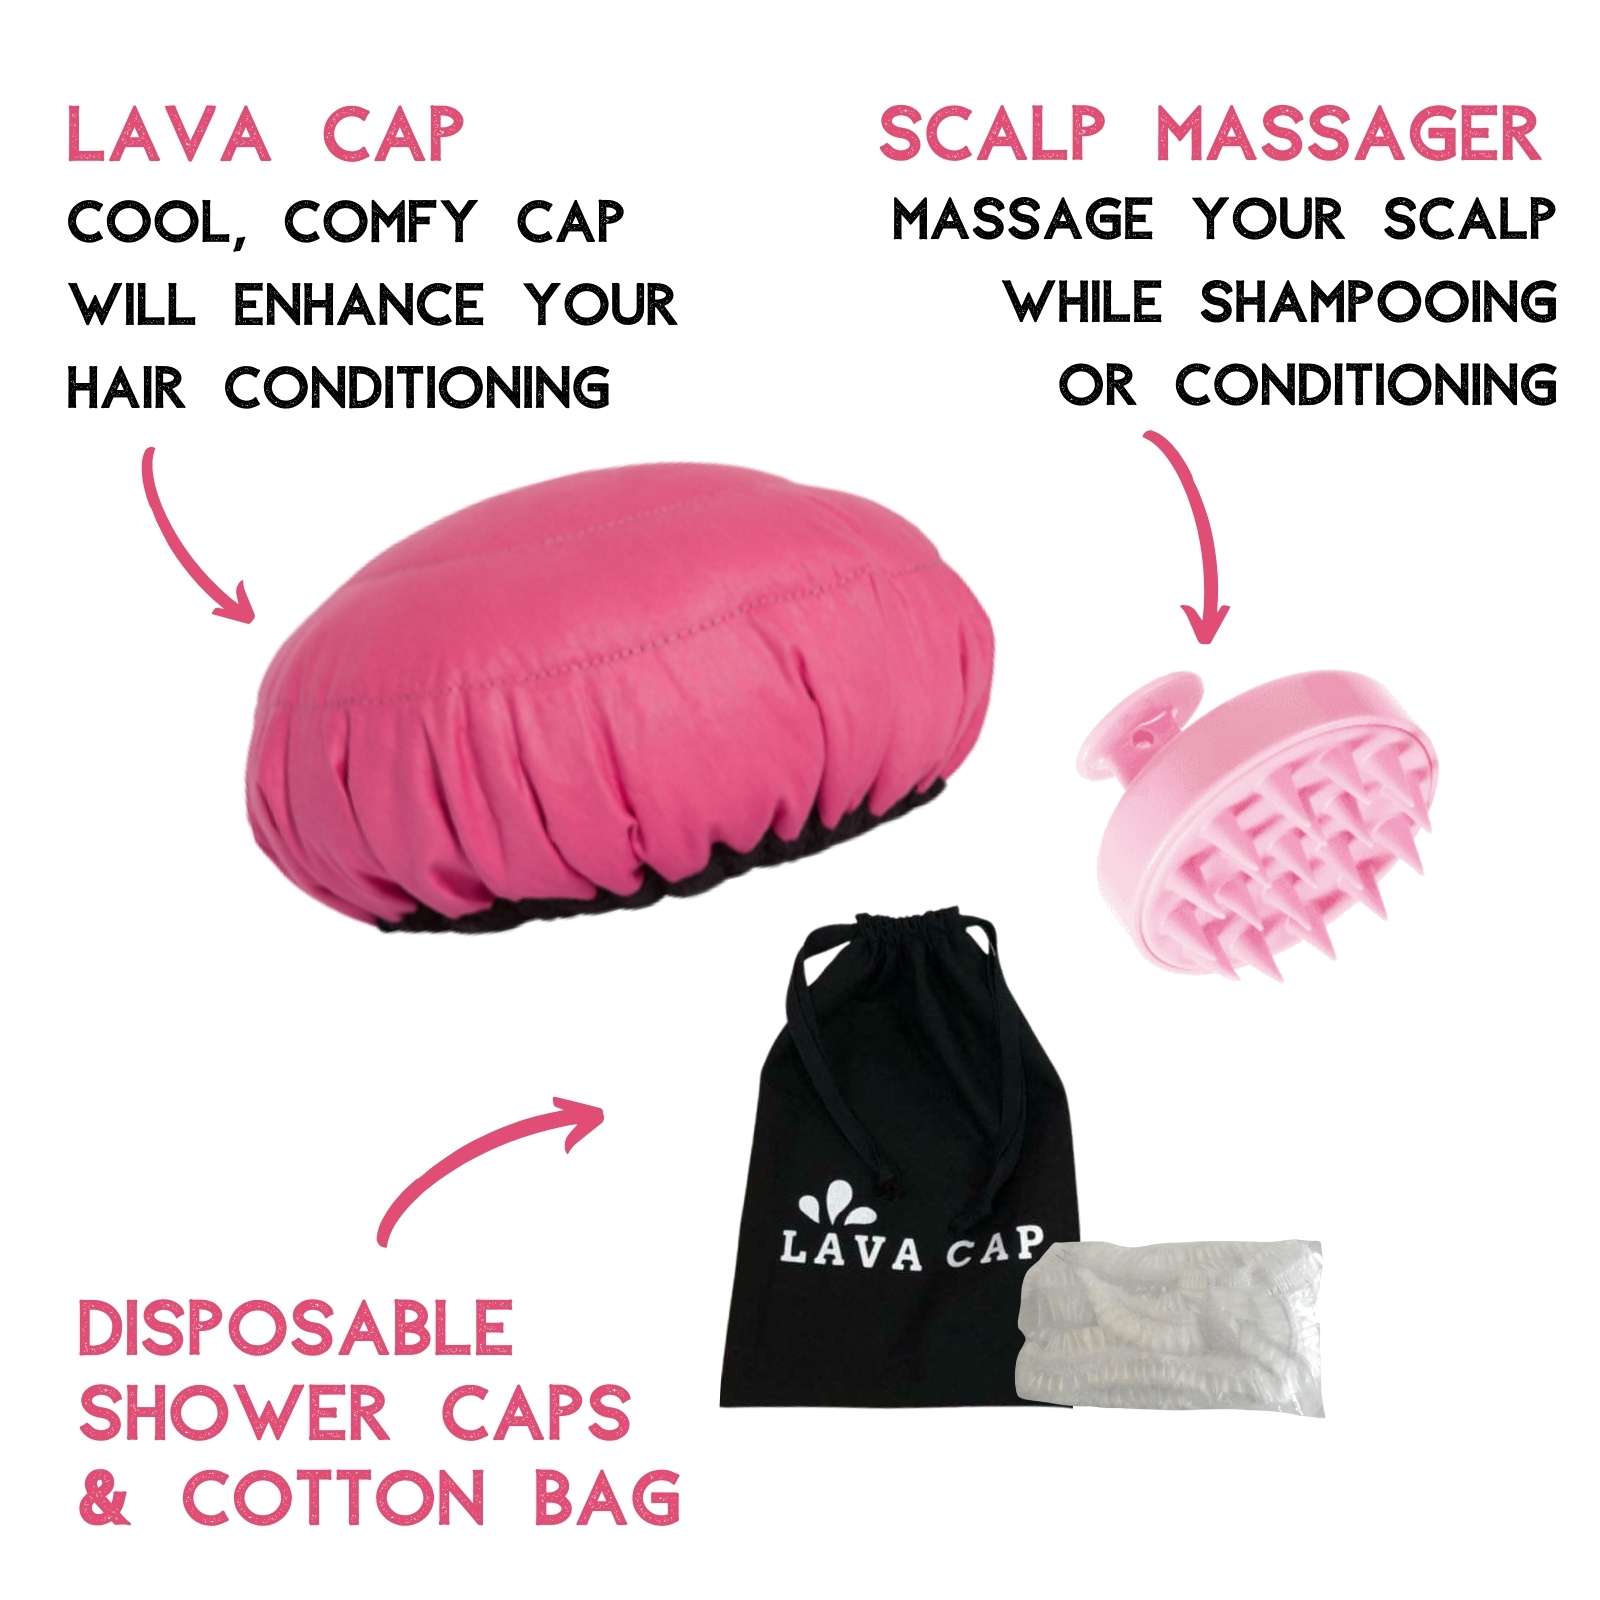 Lava Cap microwavable heat cap UK stock, with scalp massager in Retba Rose